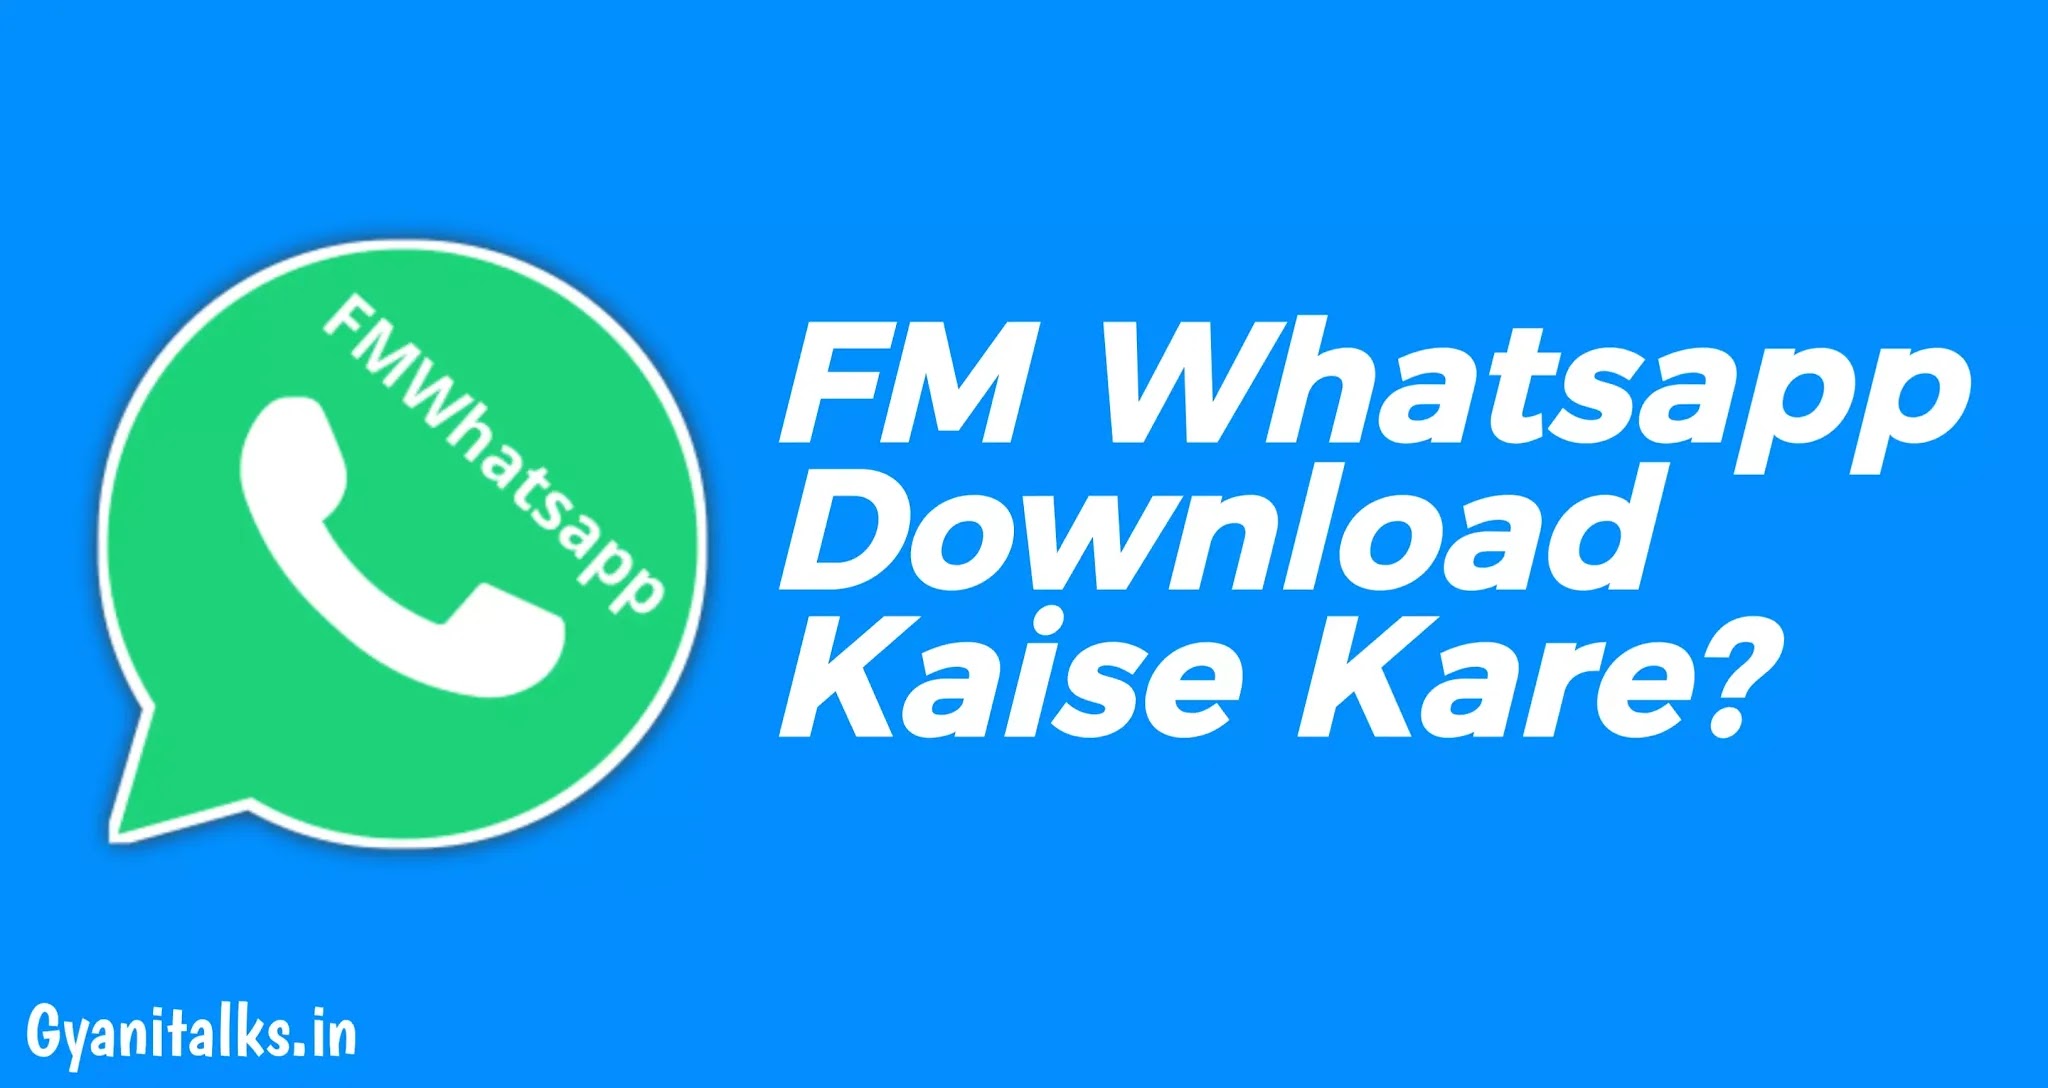 FM Whatsapp Download Kaise Kare